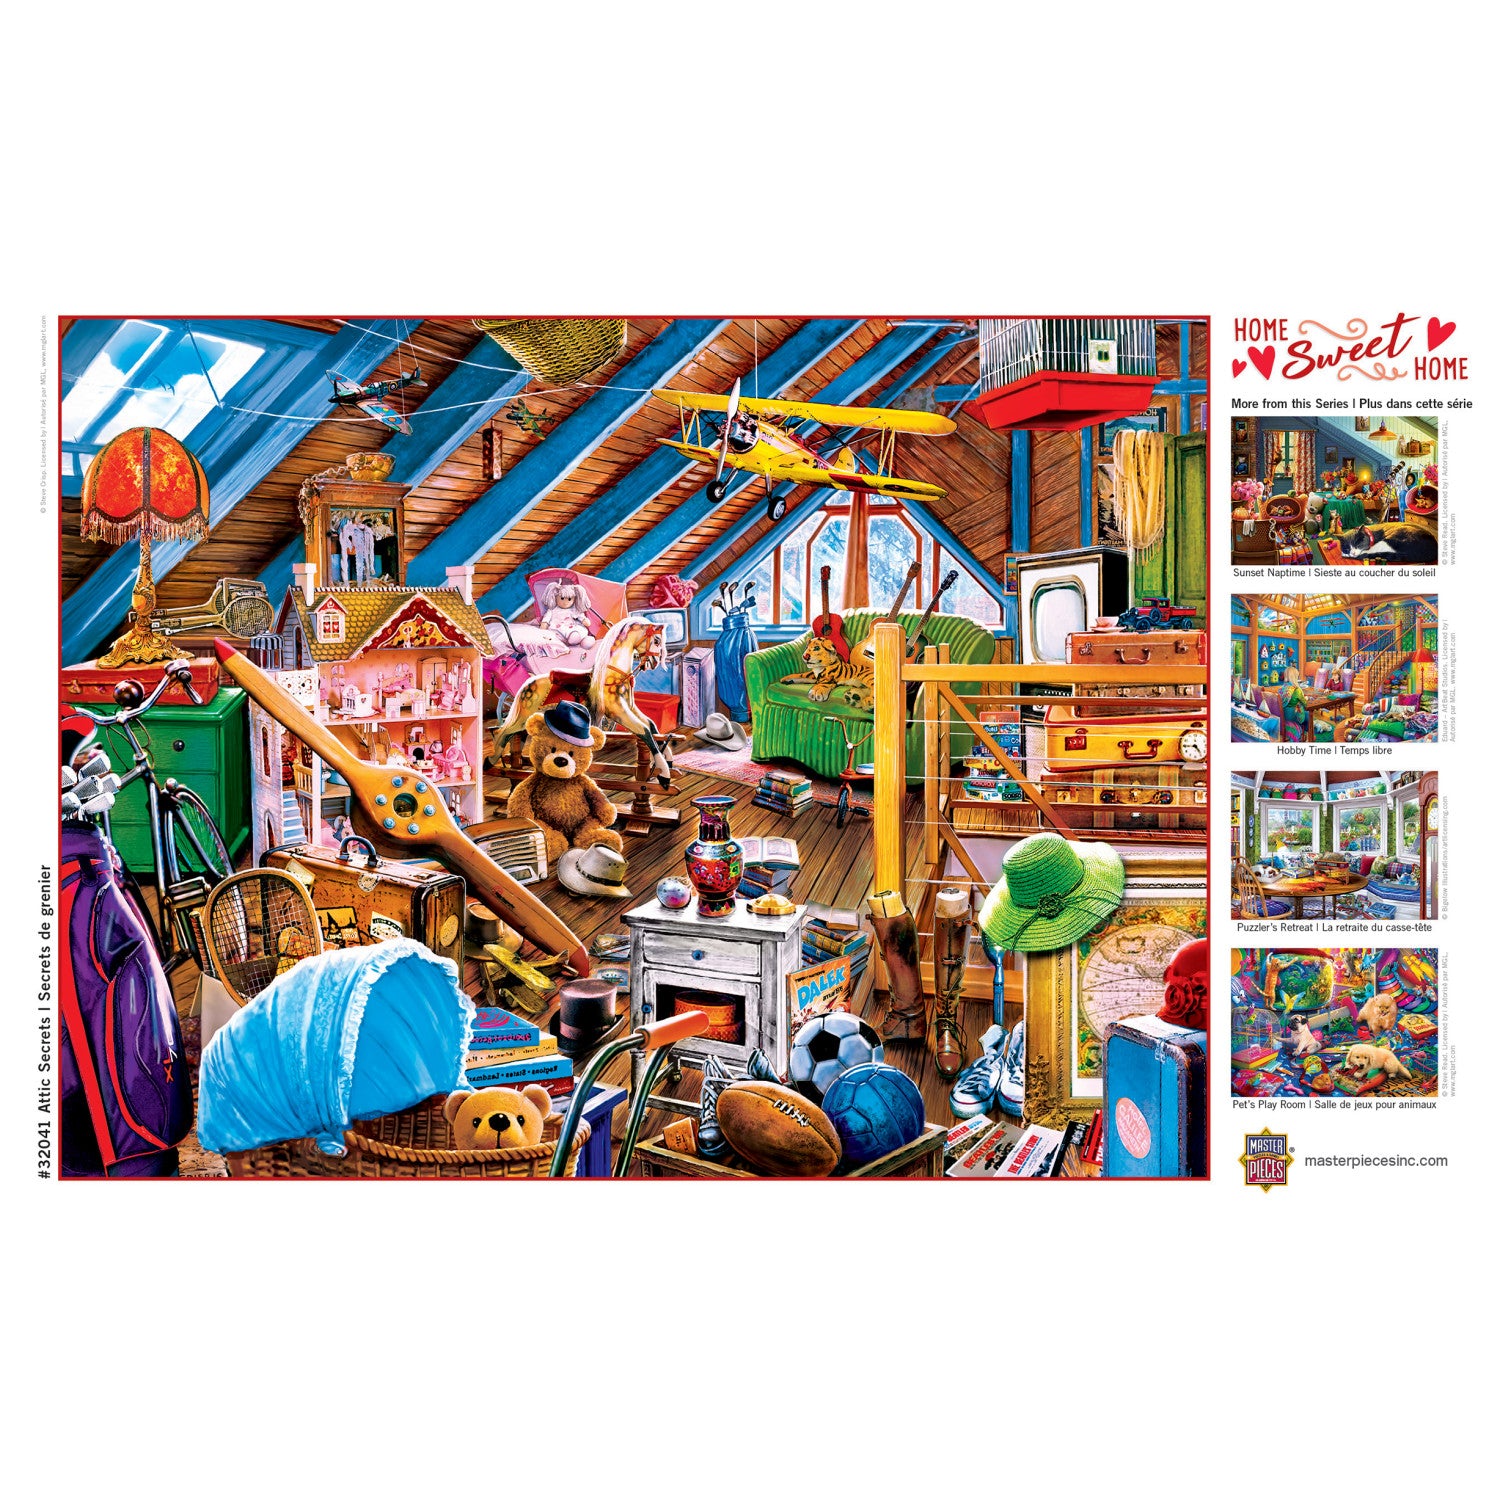 Home Sweet Home - Attic Secrets 550 Piece Jigsaw Puzzle